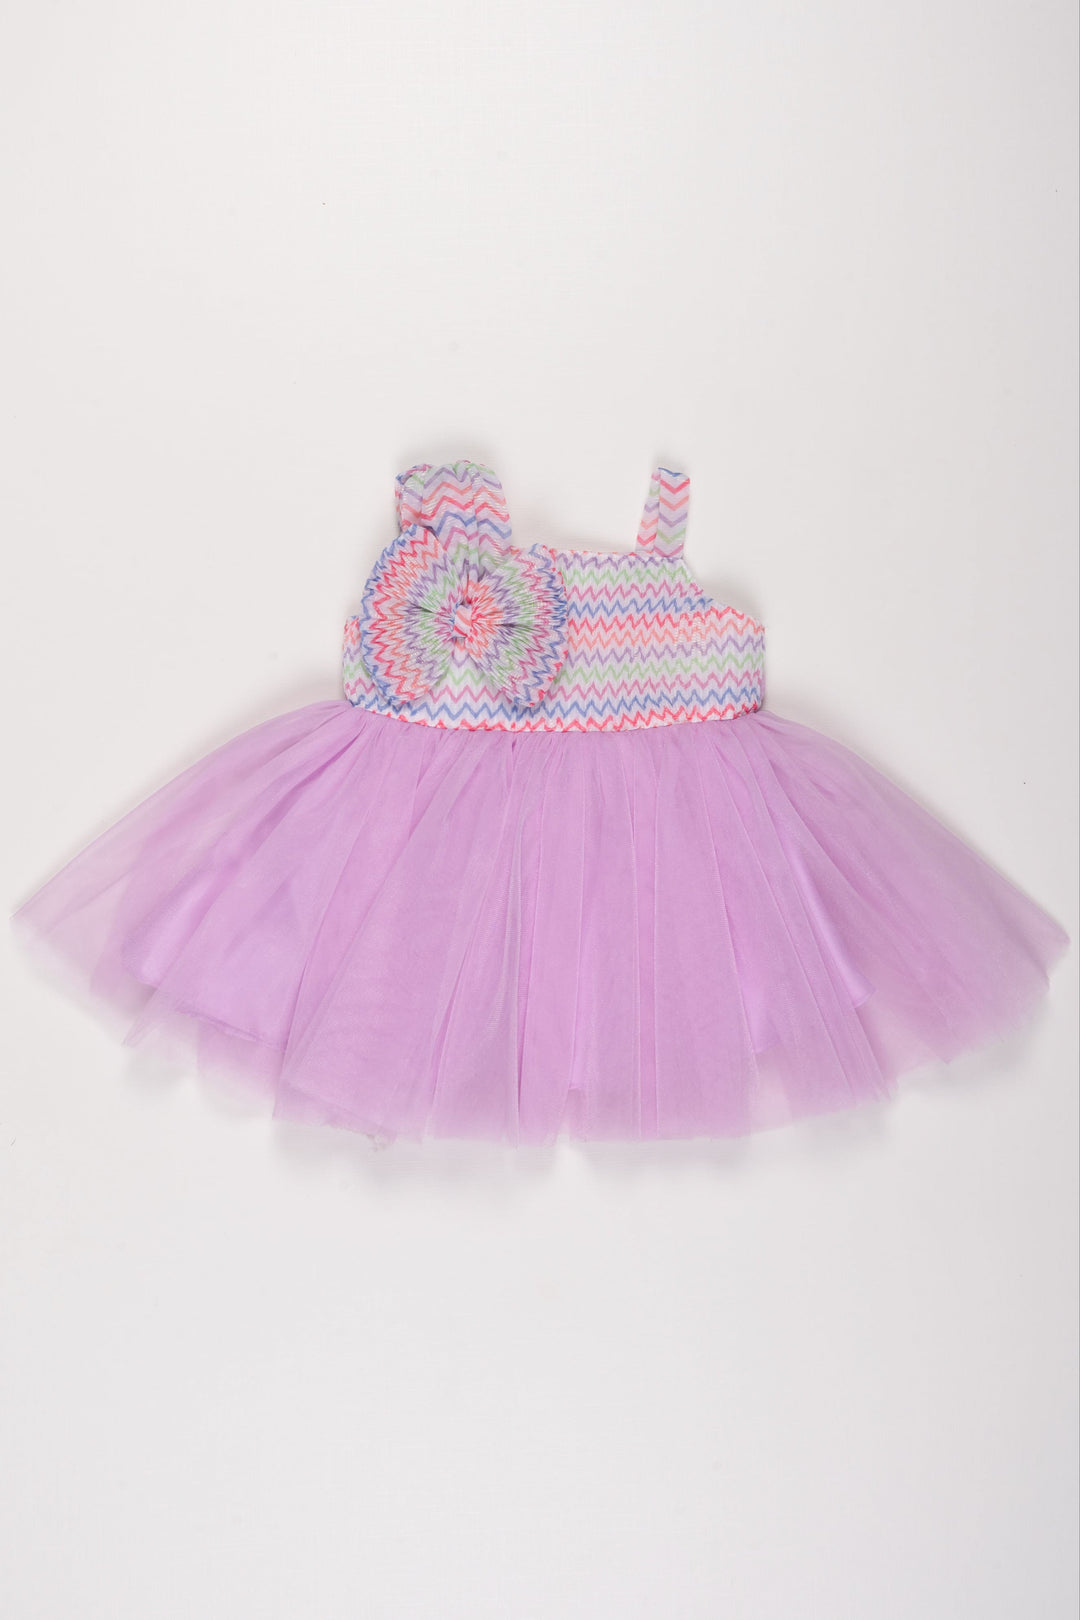 The Nesavu Girls Tutu Frock Vibrant Chevron Knit and Purple Tulle Dress for Girls Nesavu 12 (3M) / Purple / Plain Net PF172A-12 Girls Chevron Party Dress | Party Tulle Frock with Colorful Yoke | The Nesavu